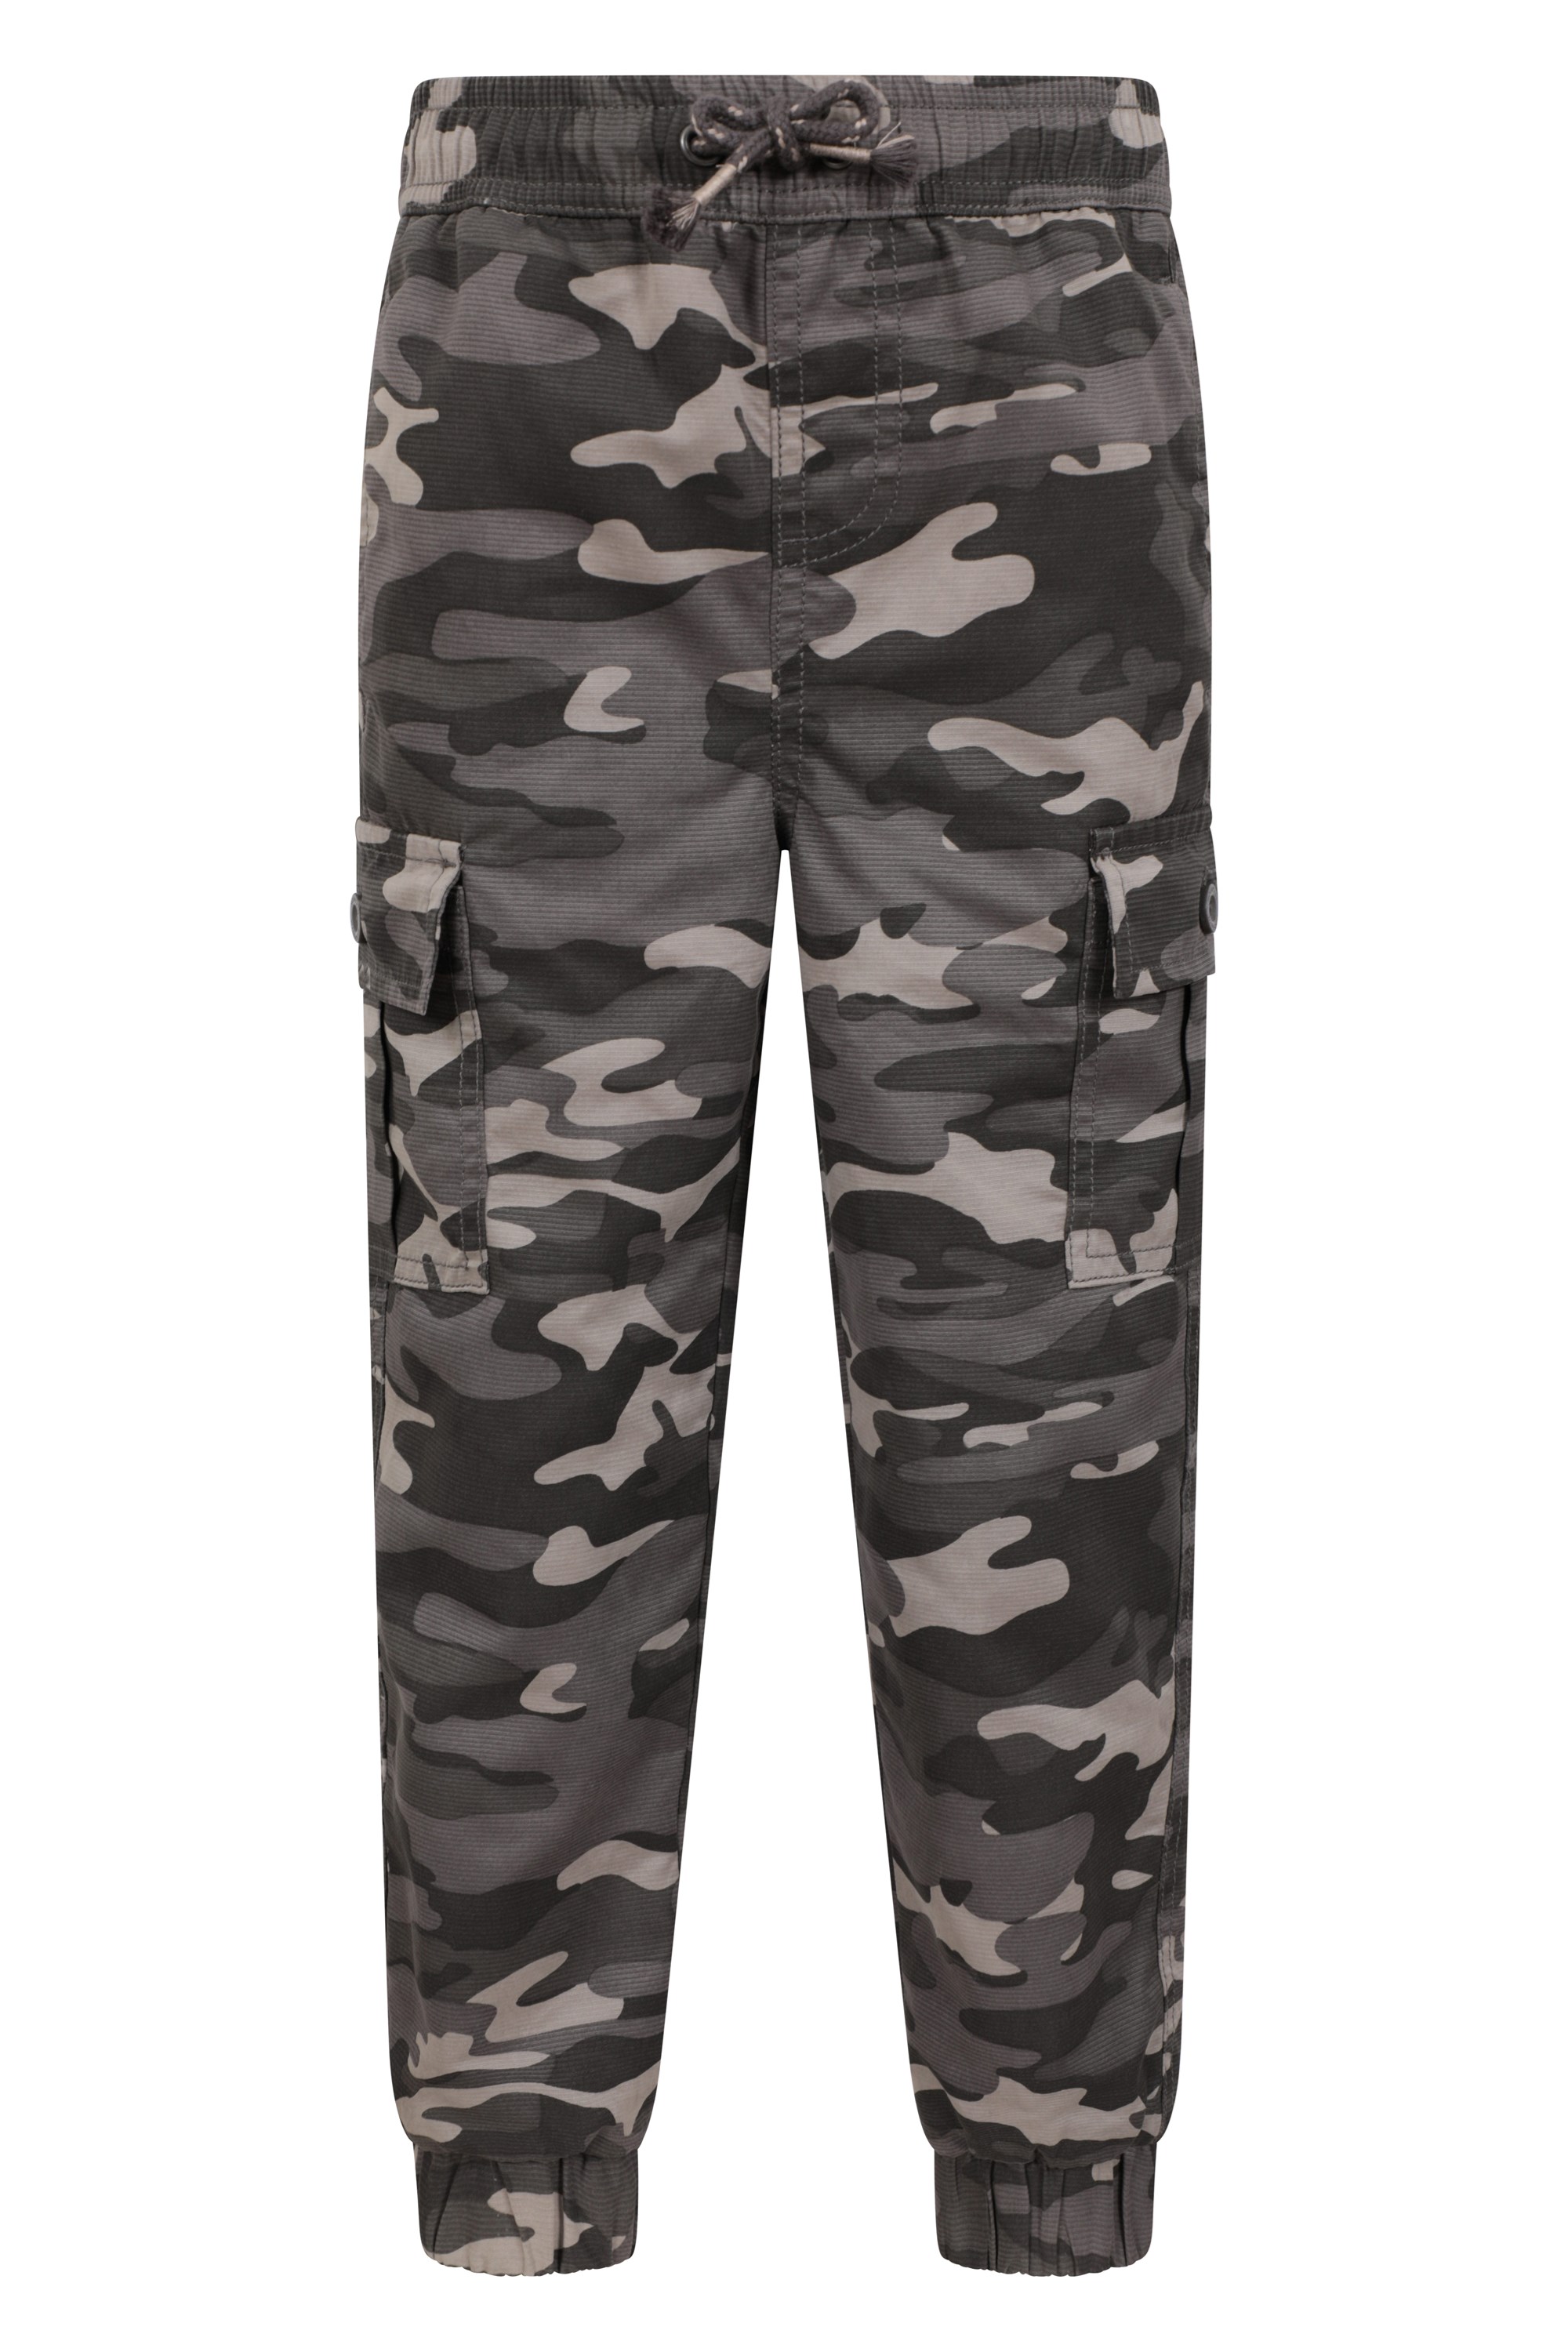 Dark Camouflage Cuffed Cargo Pants High Rise Green & Brown Camo Combat  Trousers | eBay